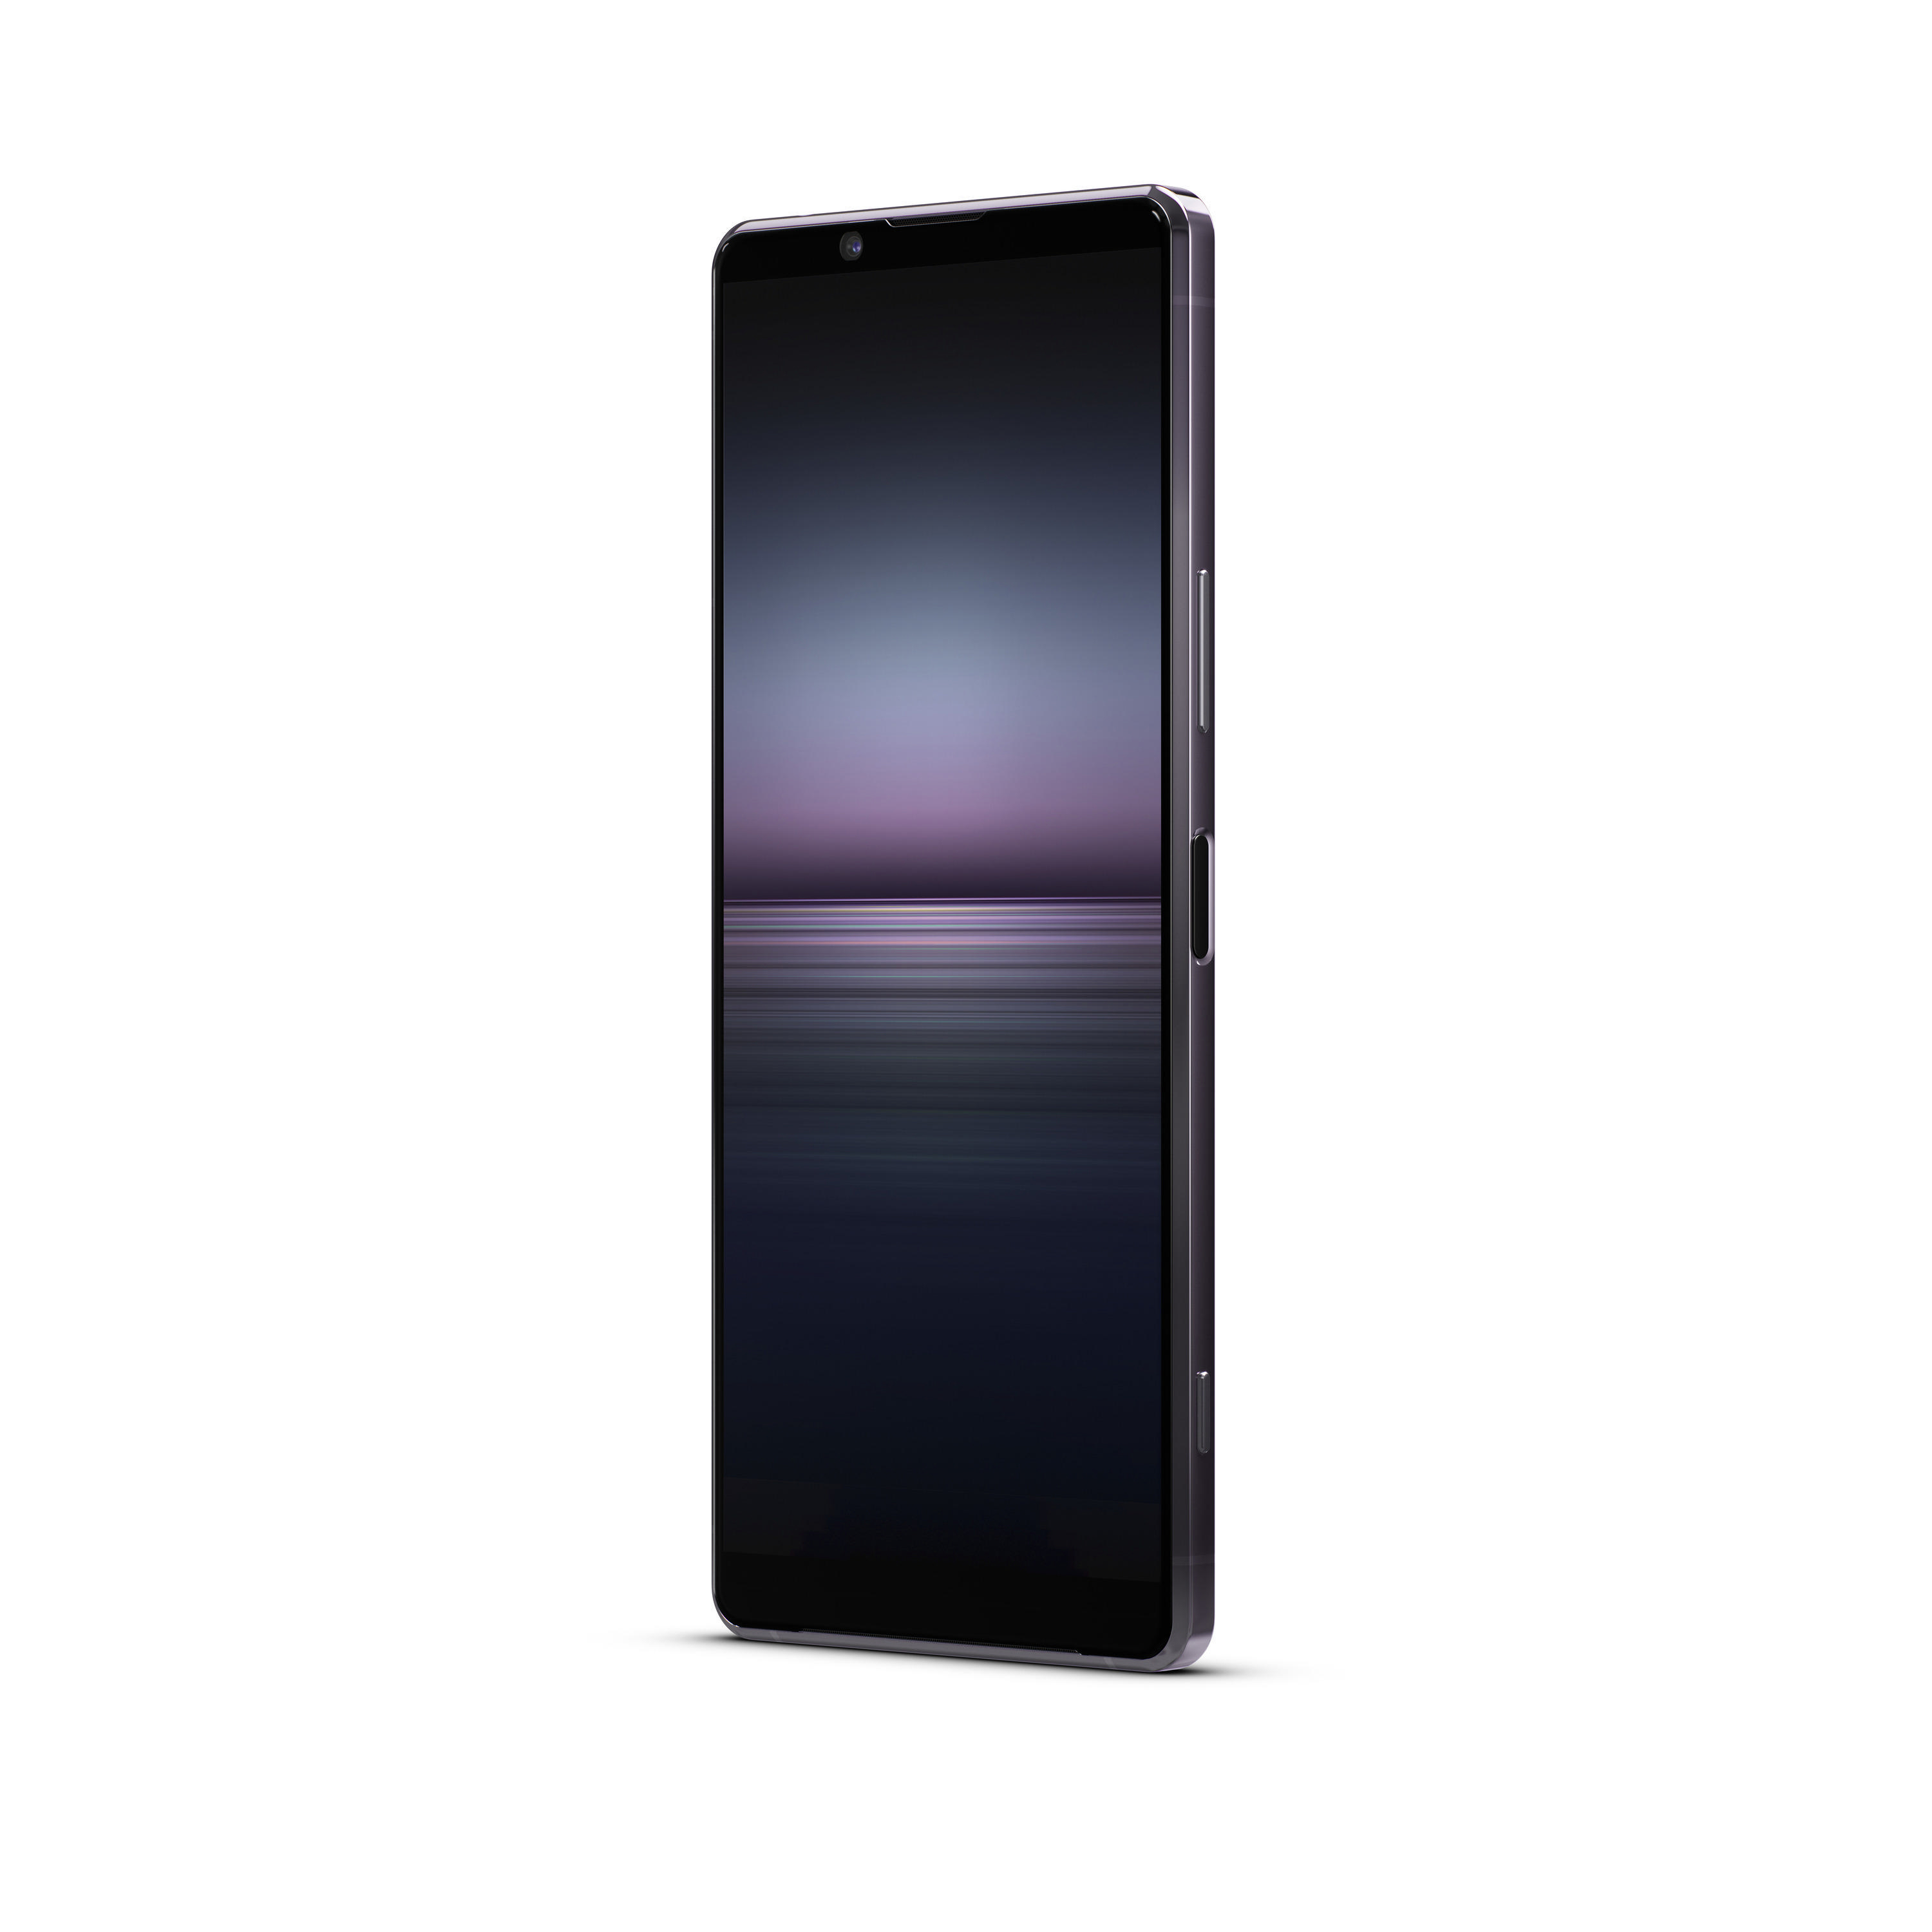 SONY Xperia II 5G GB 21:9 1 Purple 256 Display